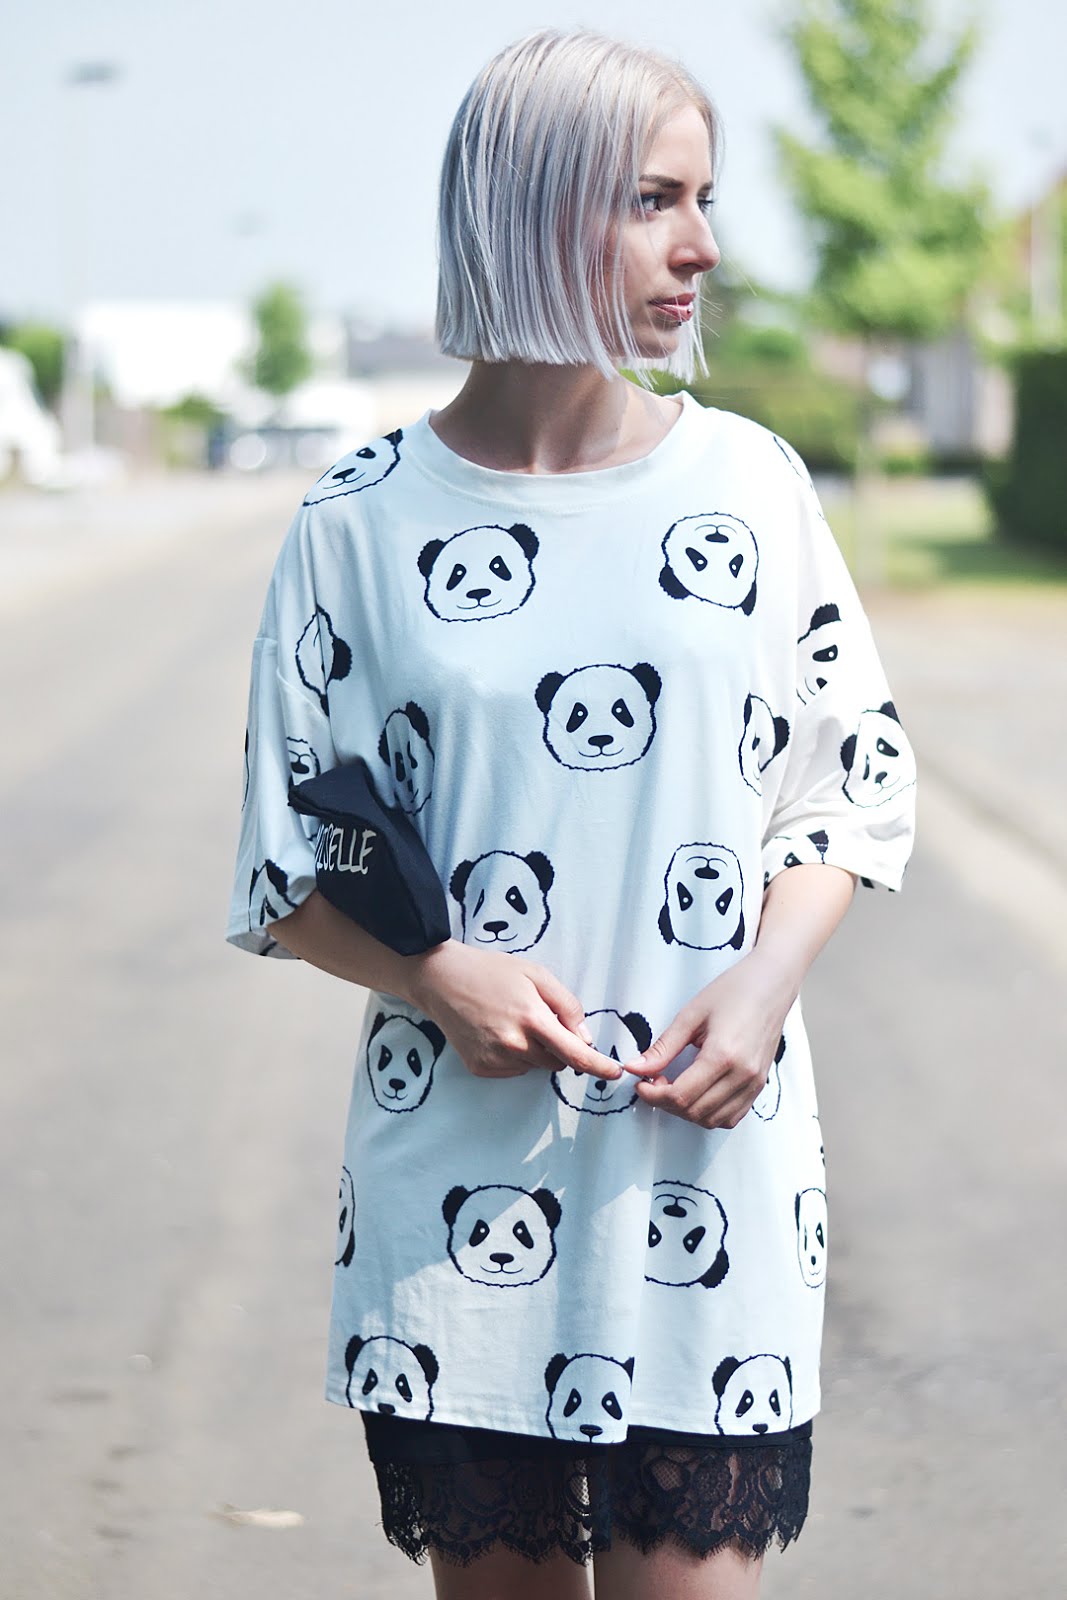 Panda, t-shirt dress, black and white, lace dress, pony hair slip on, zara, sheinside, minimal